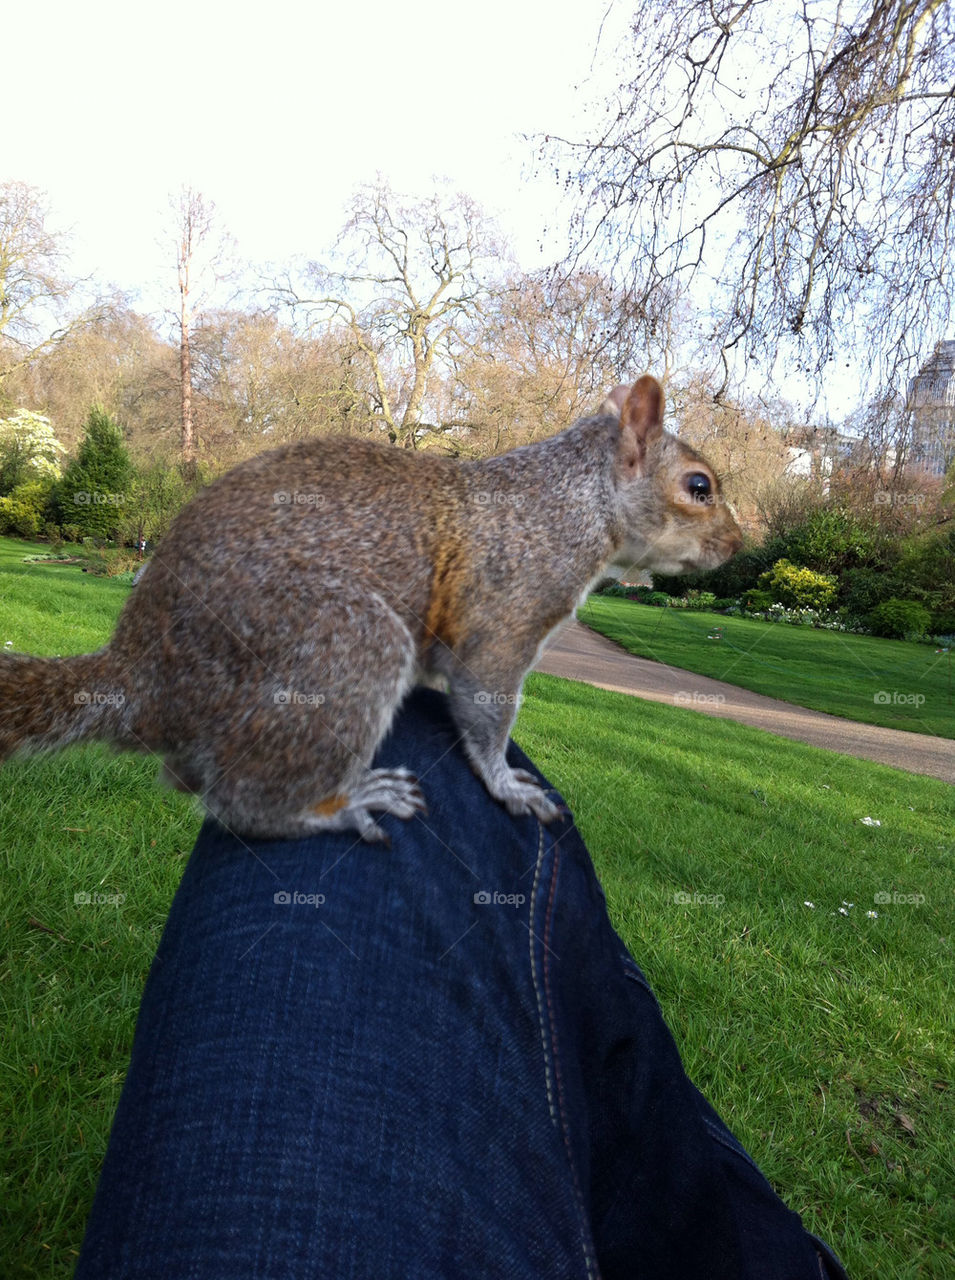 Squirrel in my leg